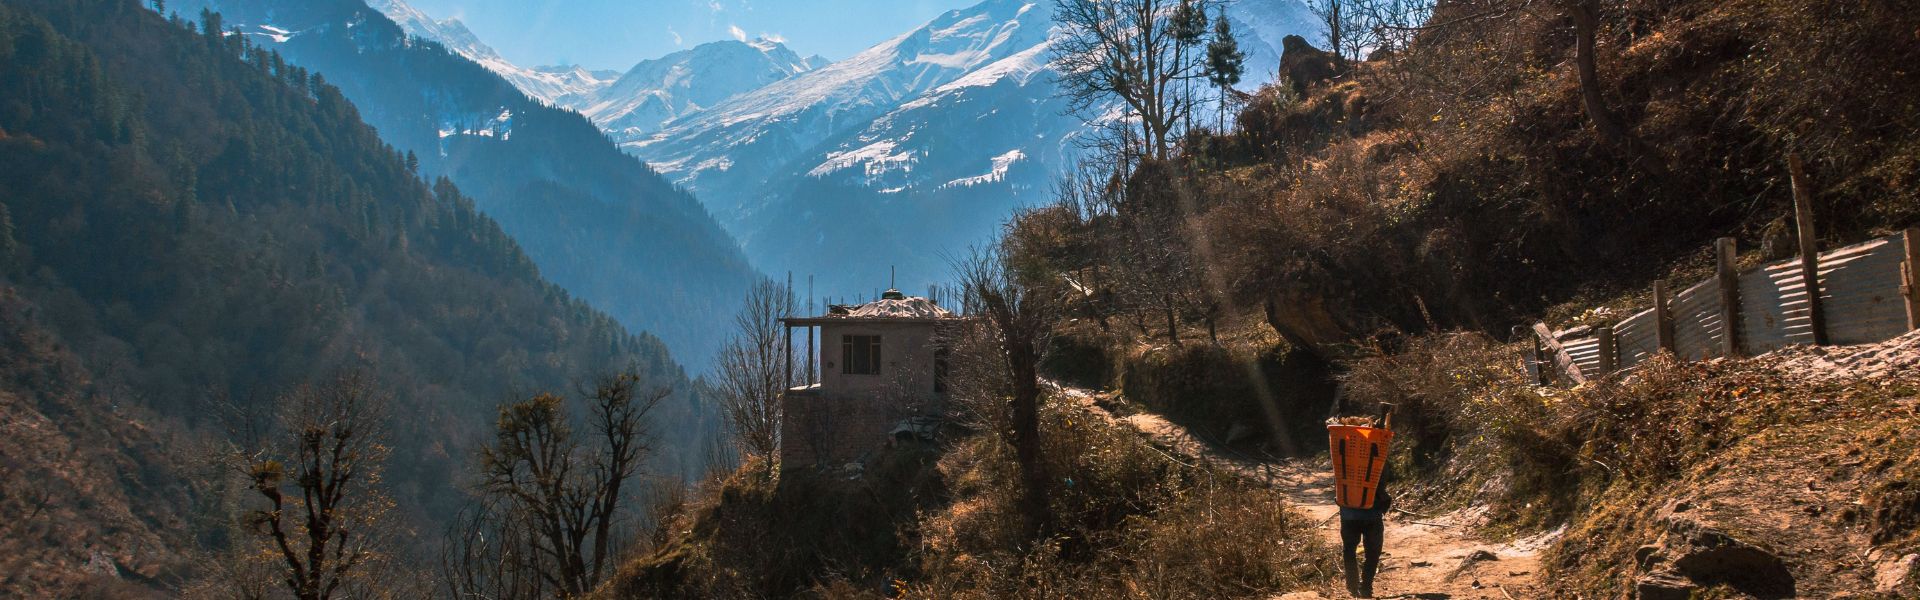 Parvati Valley - A Memorable Trip To The Land Of Hippies Waichin - Malana - Tosh - Kheerganga - Kasol